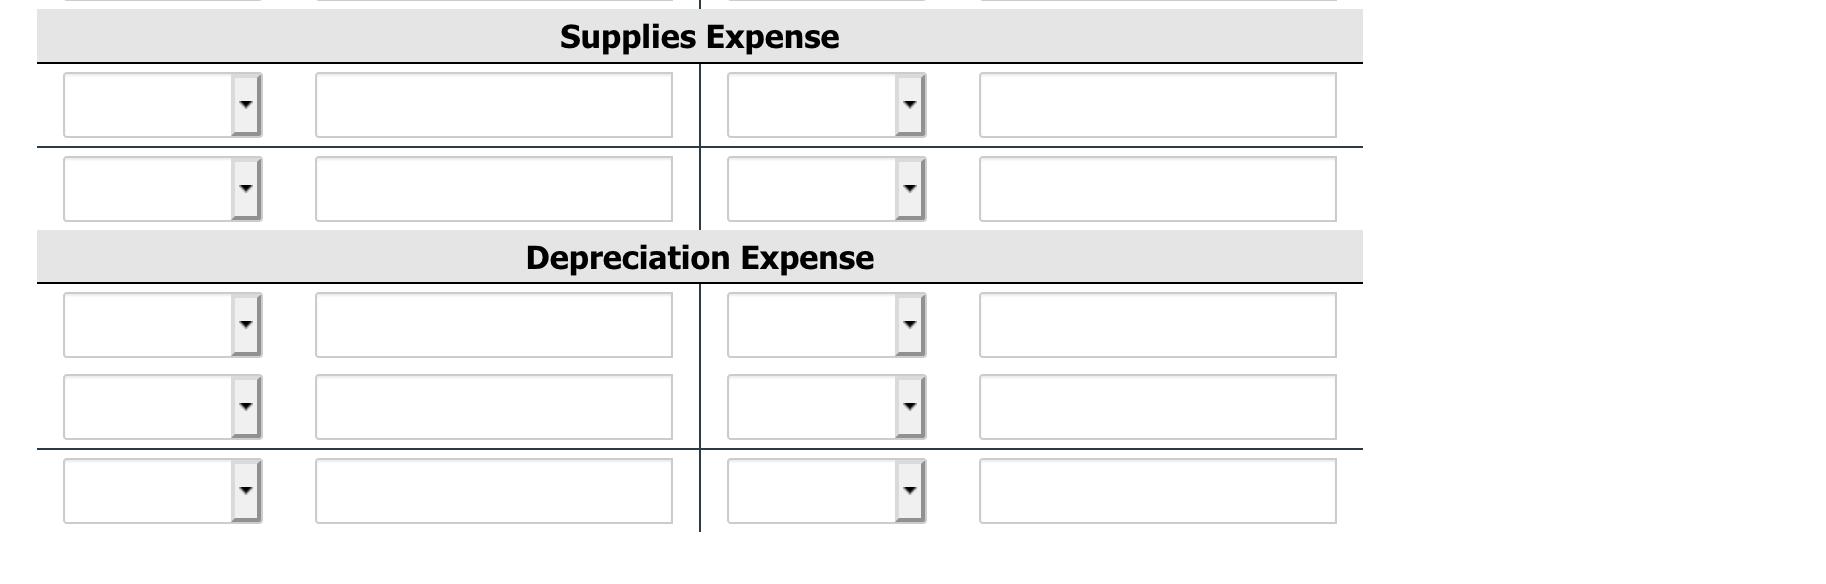 Supplies Expense Depreciation Expense